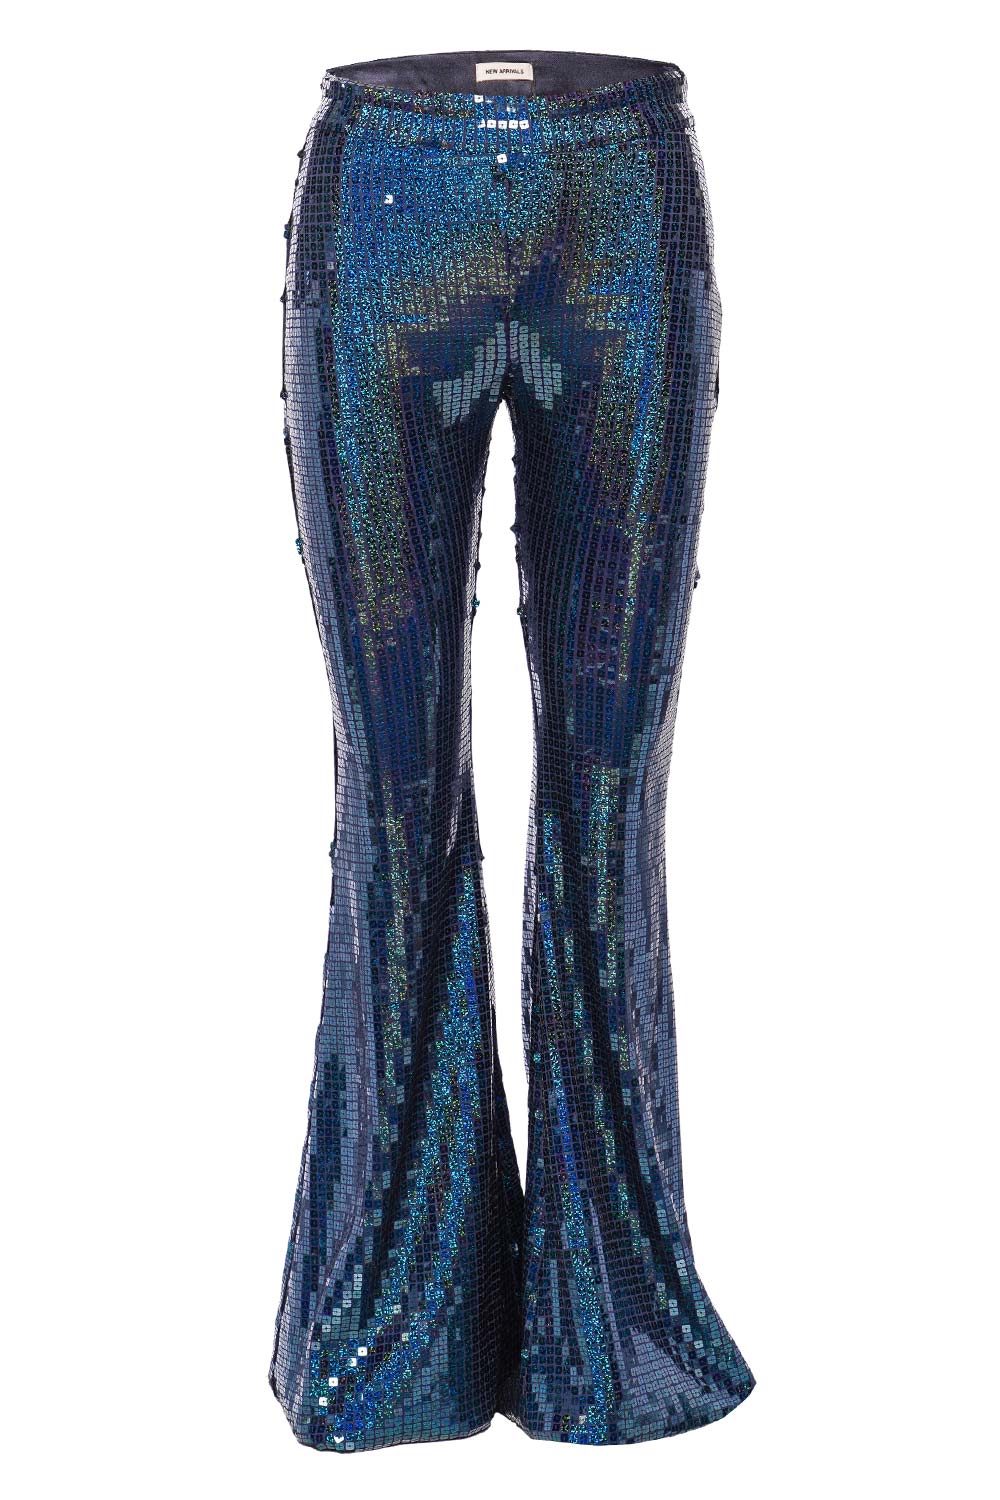 The New Arrivals by Ilkyaz Ozel Colette Lapis Lazuli Sequined Flare Pants